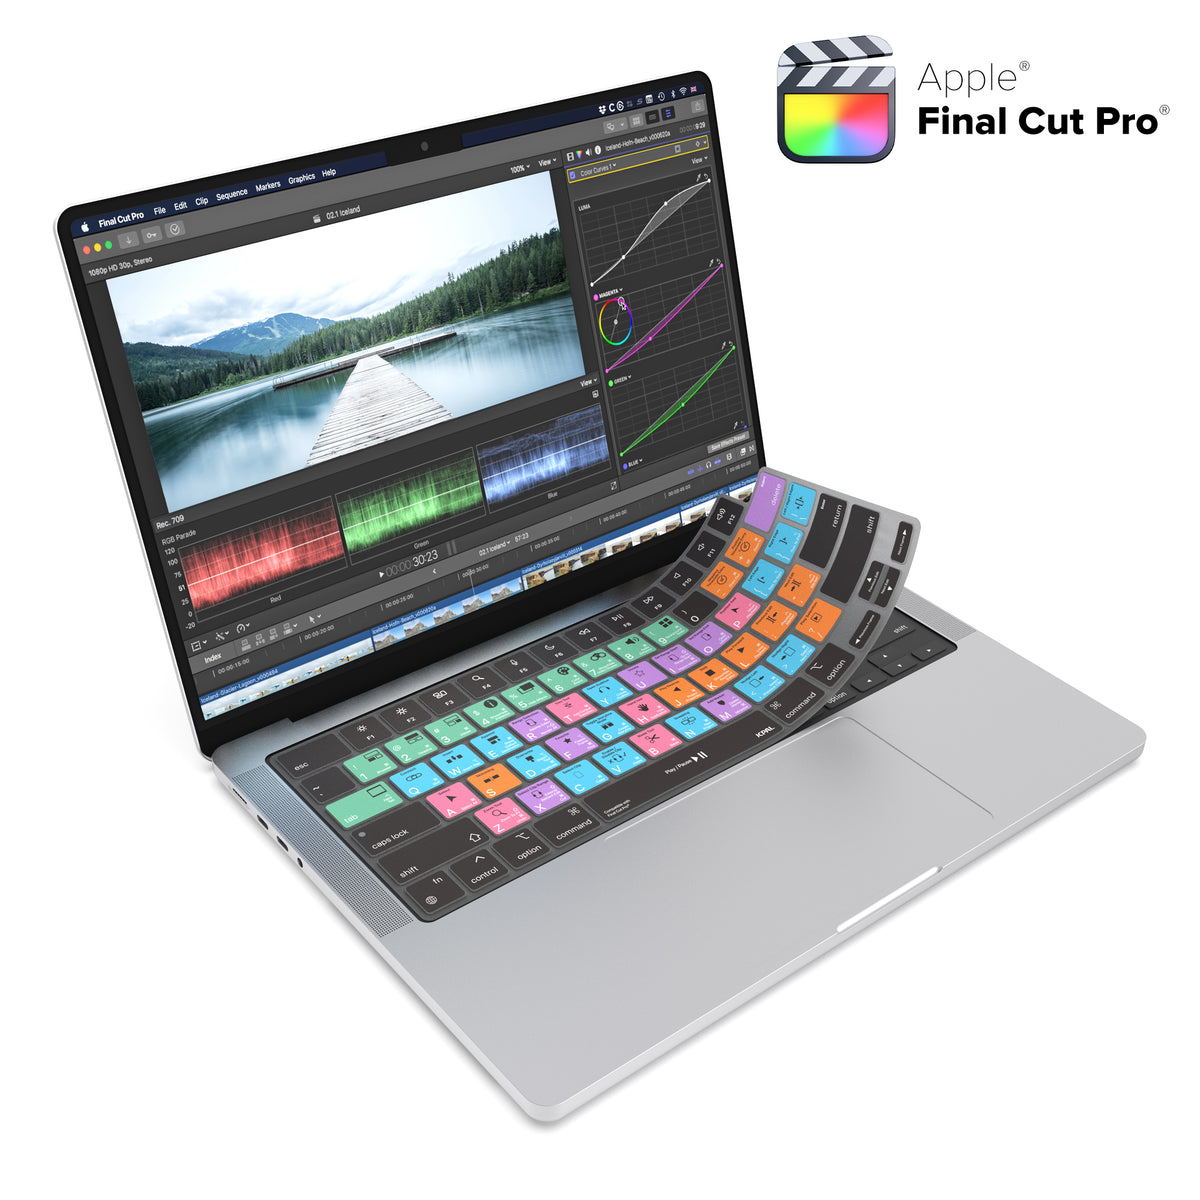 Ochraniacz klawiatury VerSkin Apple Final Cut Pro na skróty